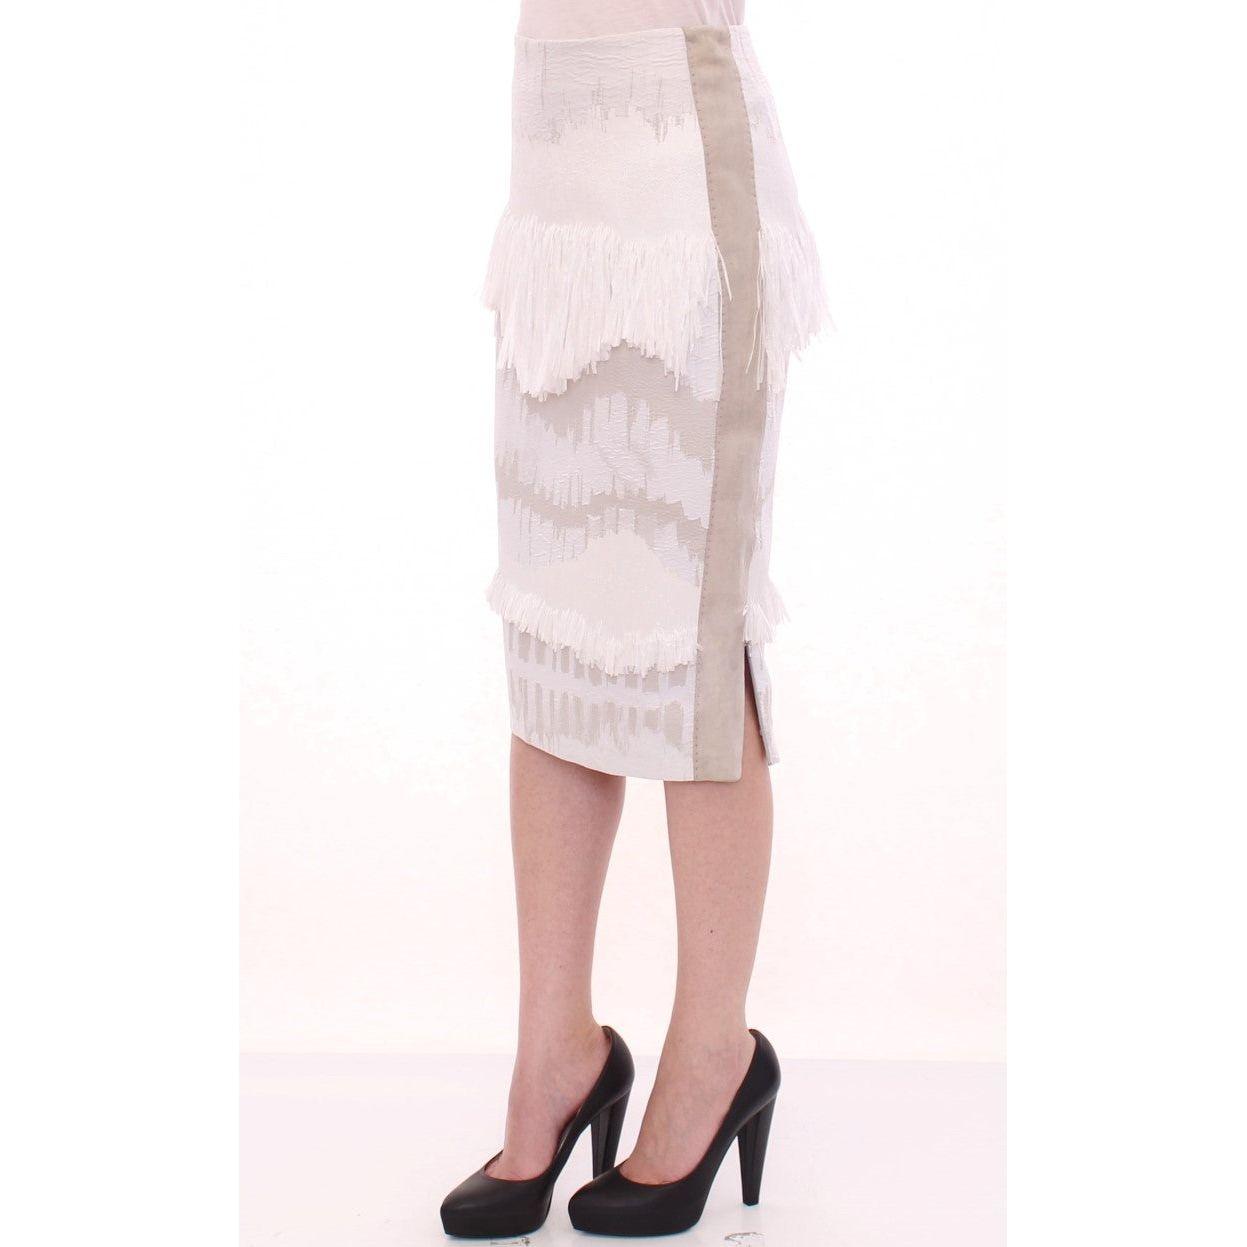 Arzu Kaprol Elegant Pencil Skirt in White and Gray Tones white-acrylic-straight-pencil-skirt 149709-white-acrylic-straight-pencil-skirt-1.jpg